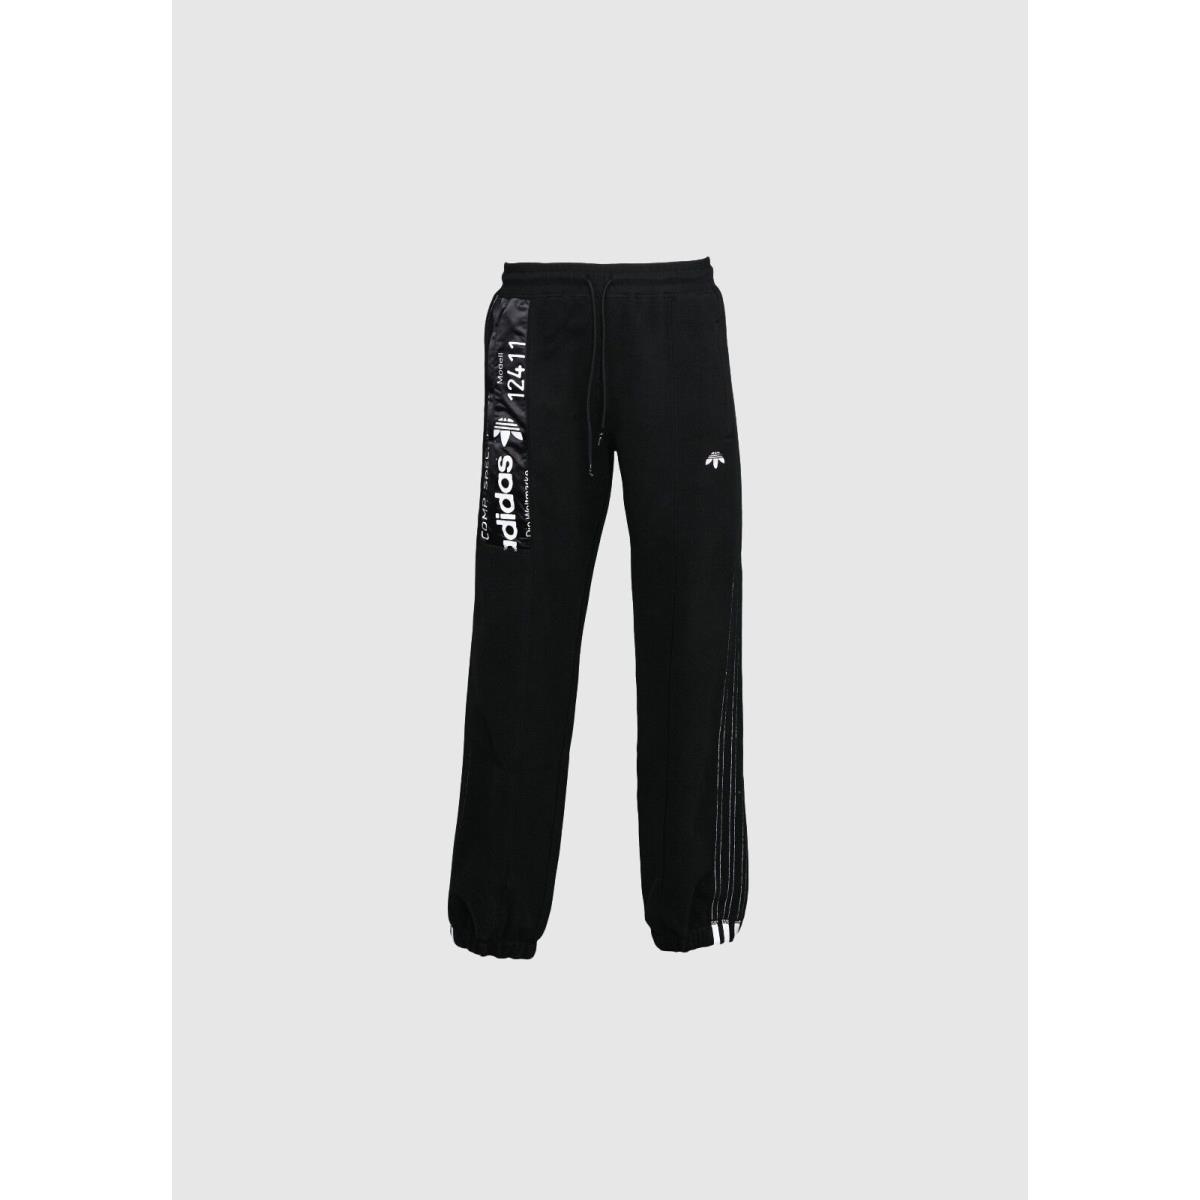 Men`s Adidas AW Polor Athletic Graphic Topic Fashion Jogger CV5248